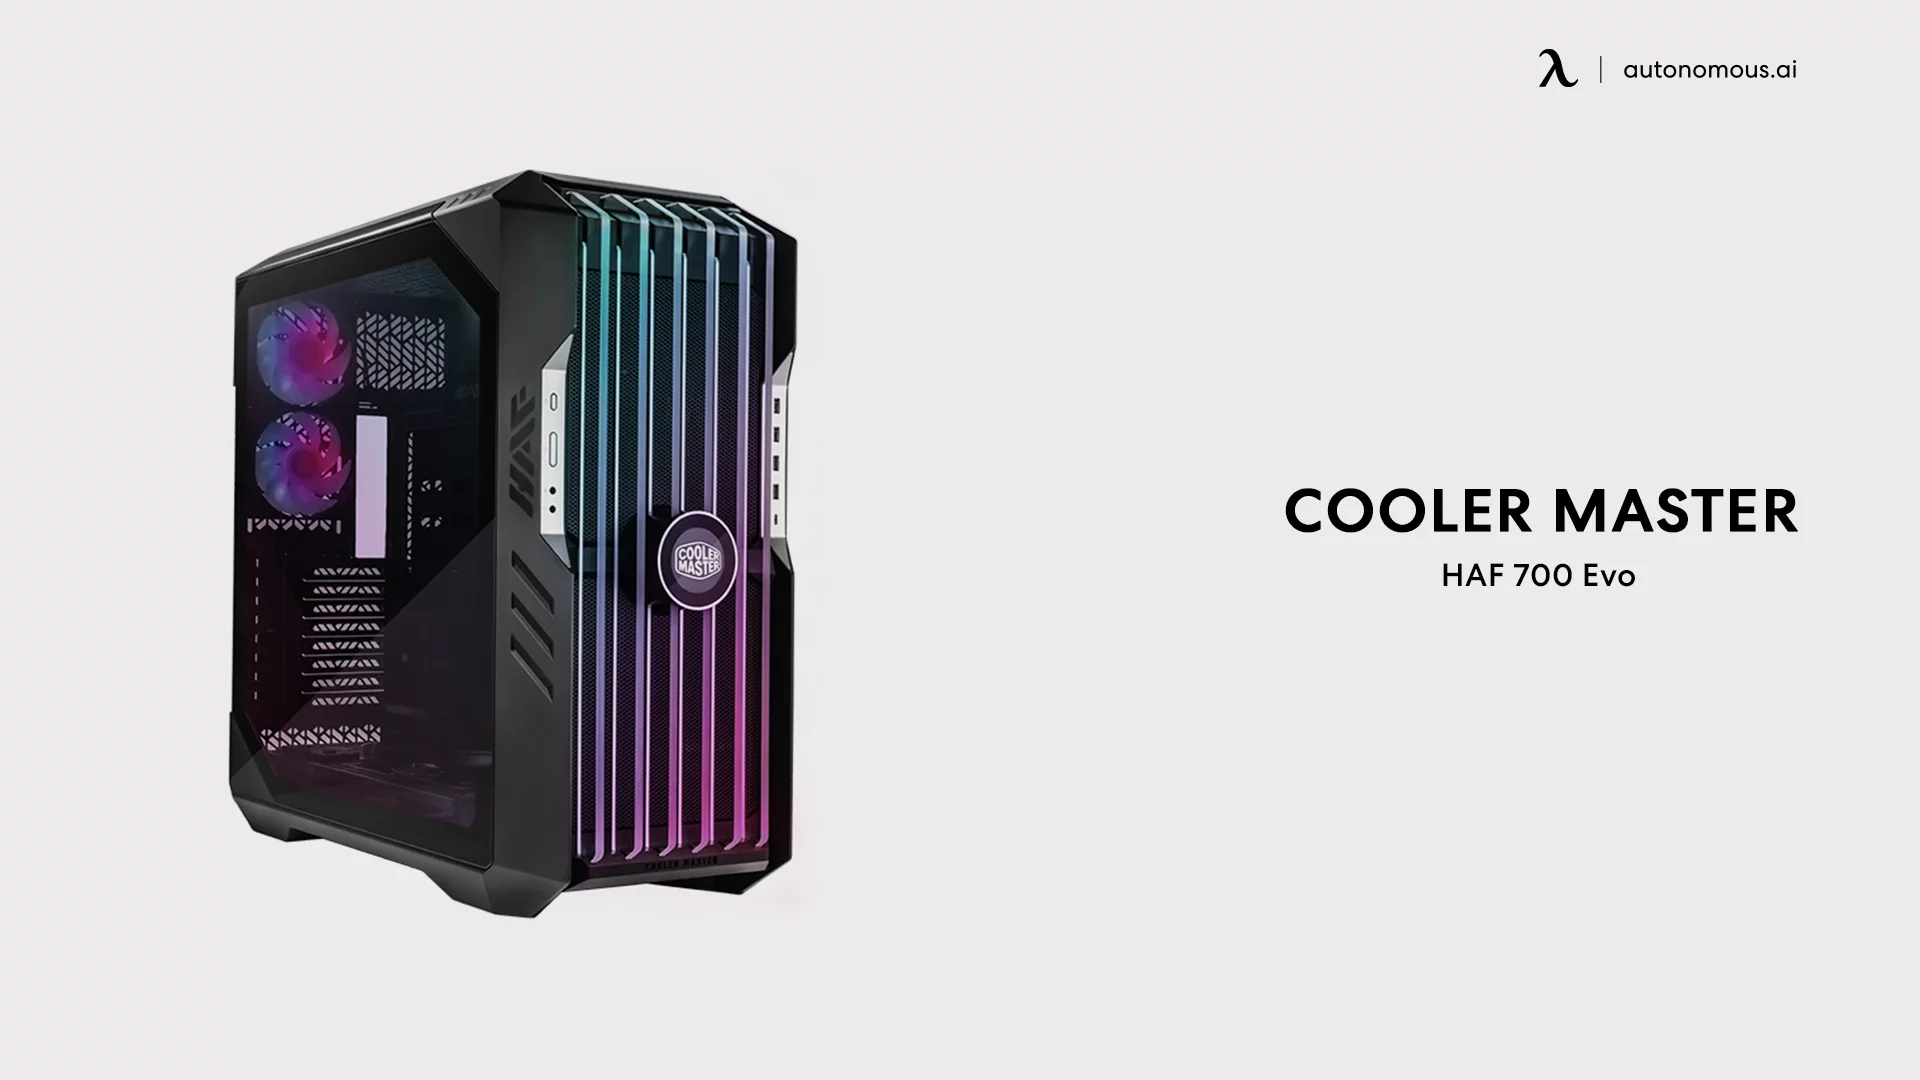 Cooler Master HAF 700 Evo PC case stand